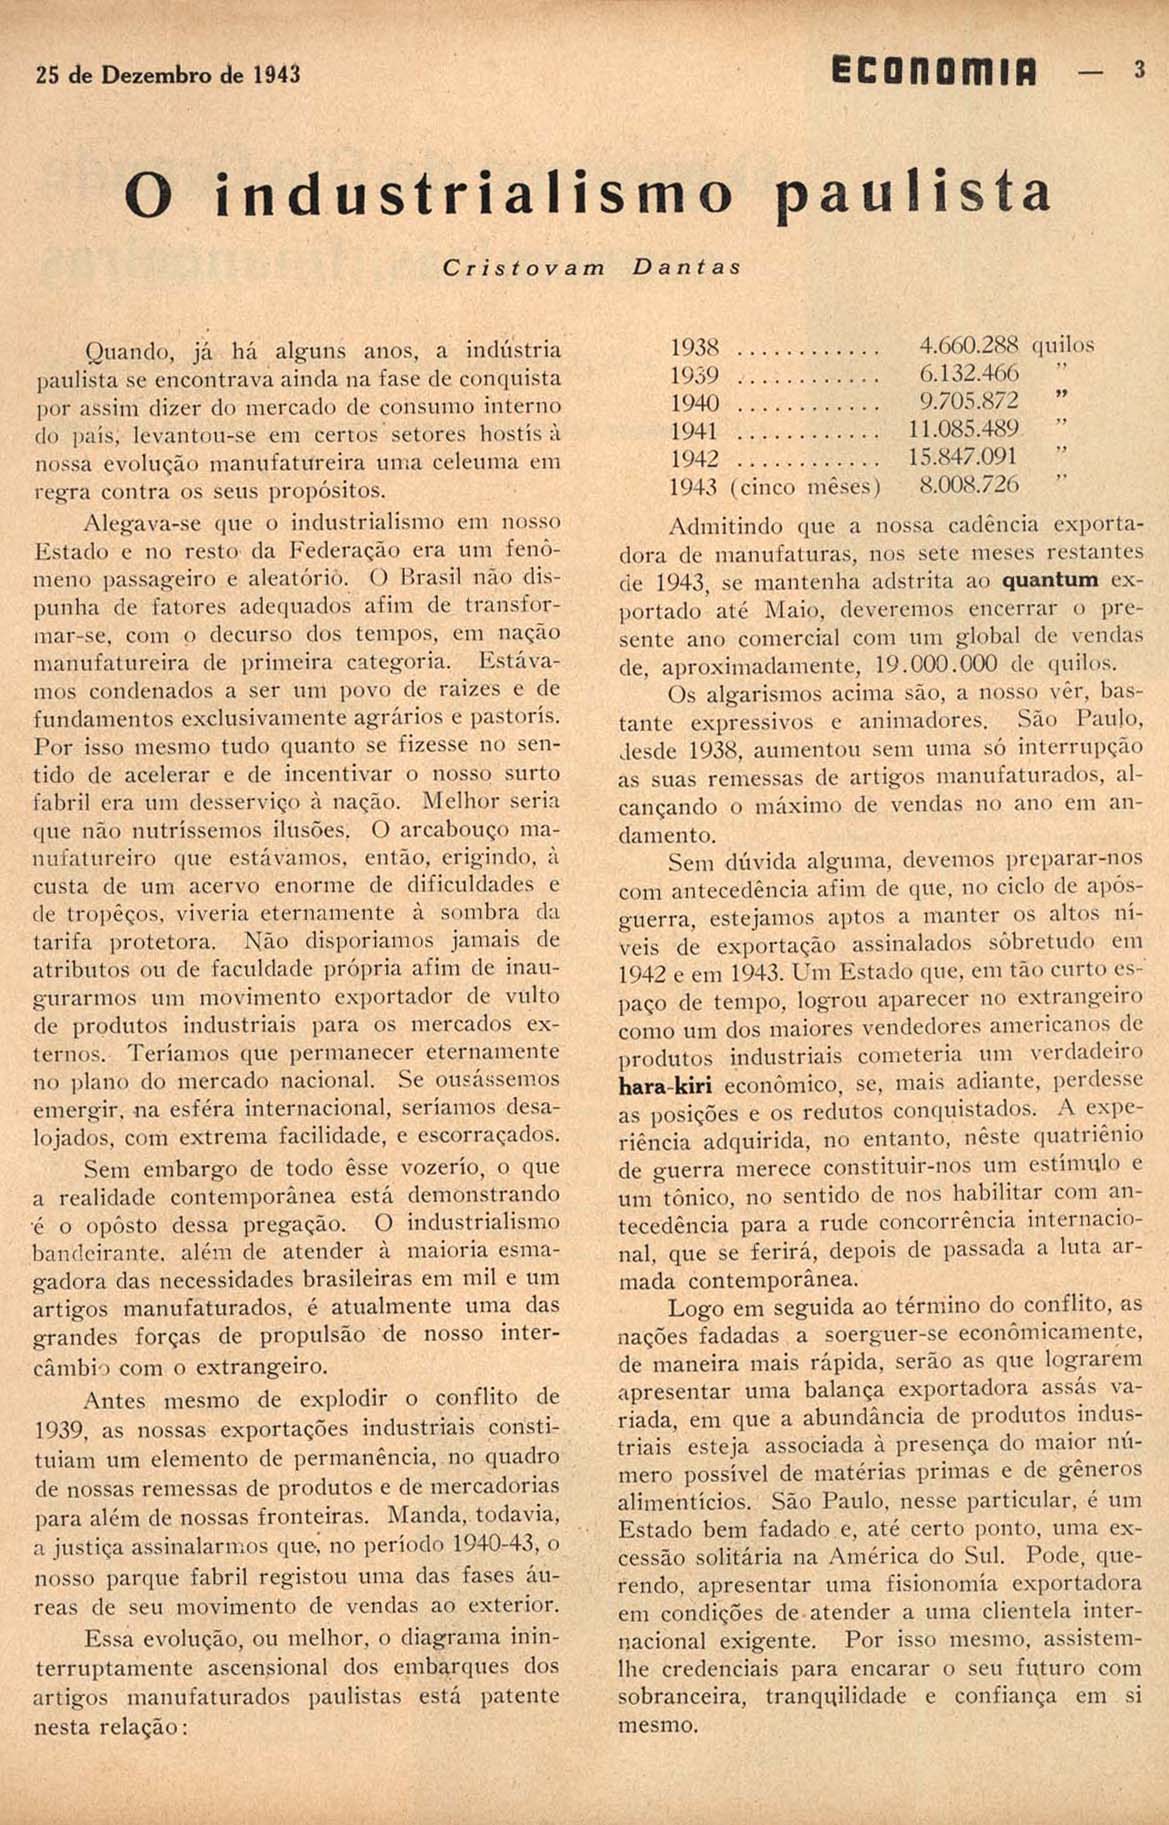 DANTAS, Cristovam. O INDUSTRIALISMO paulista. Economia, Rio de Janeiro, n. 55, p. 3, dez. 1943.